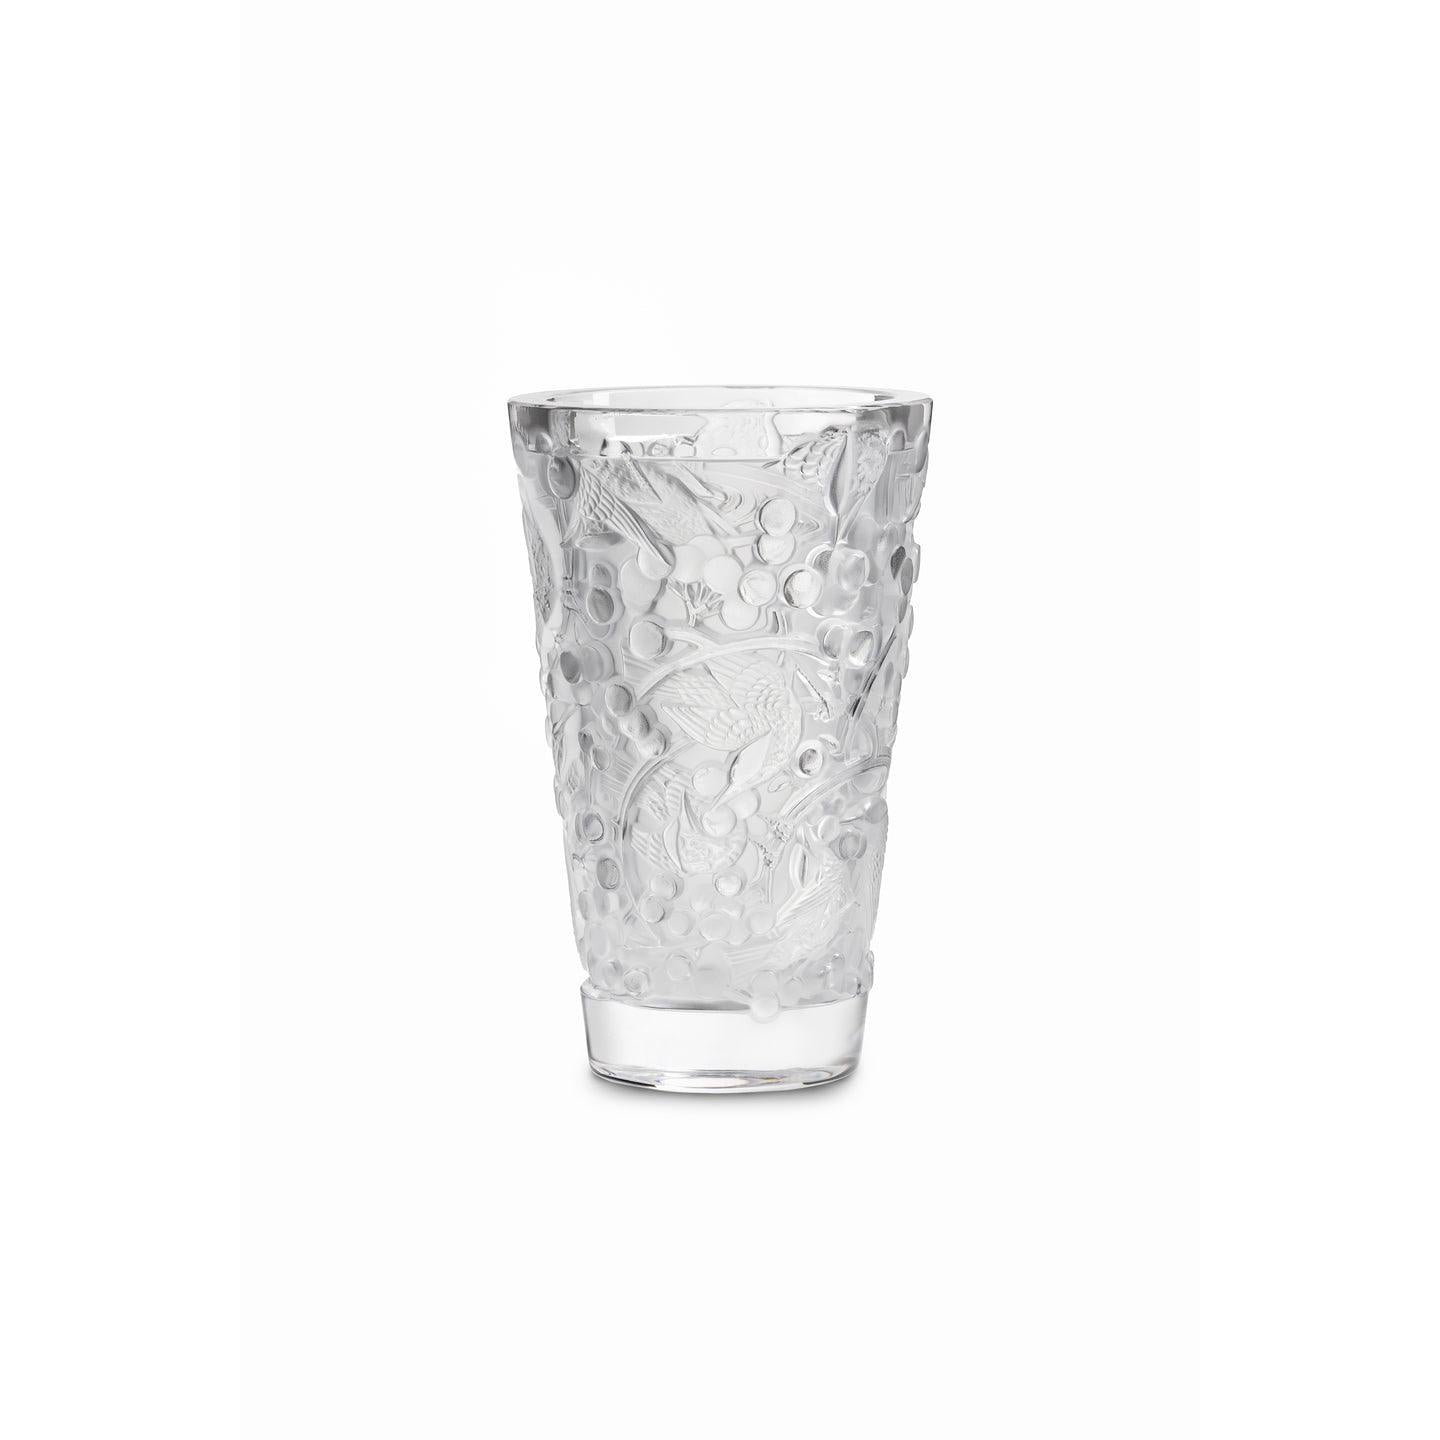 Merles Et Raisins Vase Medium Size (Lalique) - Gallery Gifts Online 